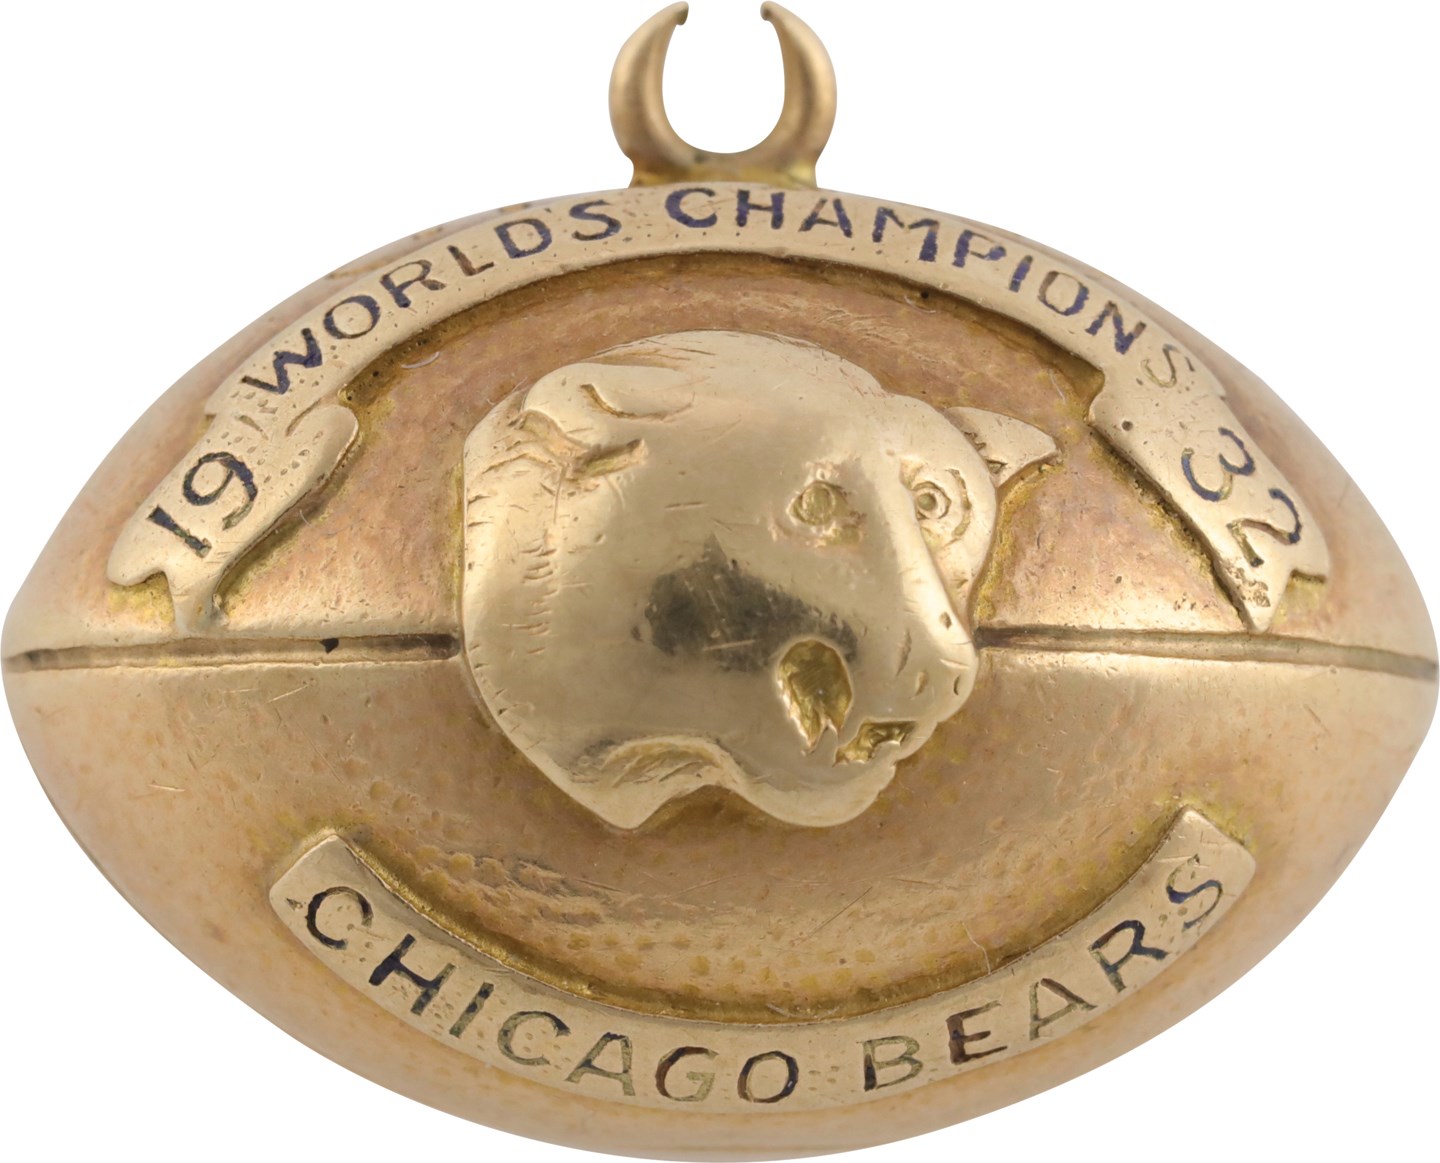 - 1932 Chicago Bears World Championship Fob